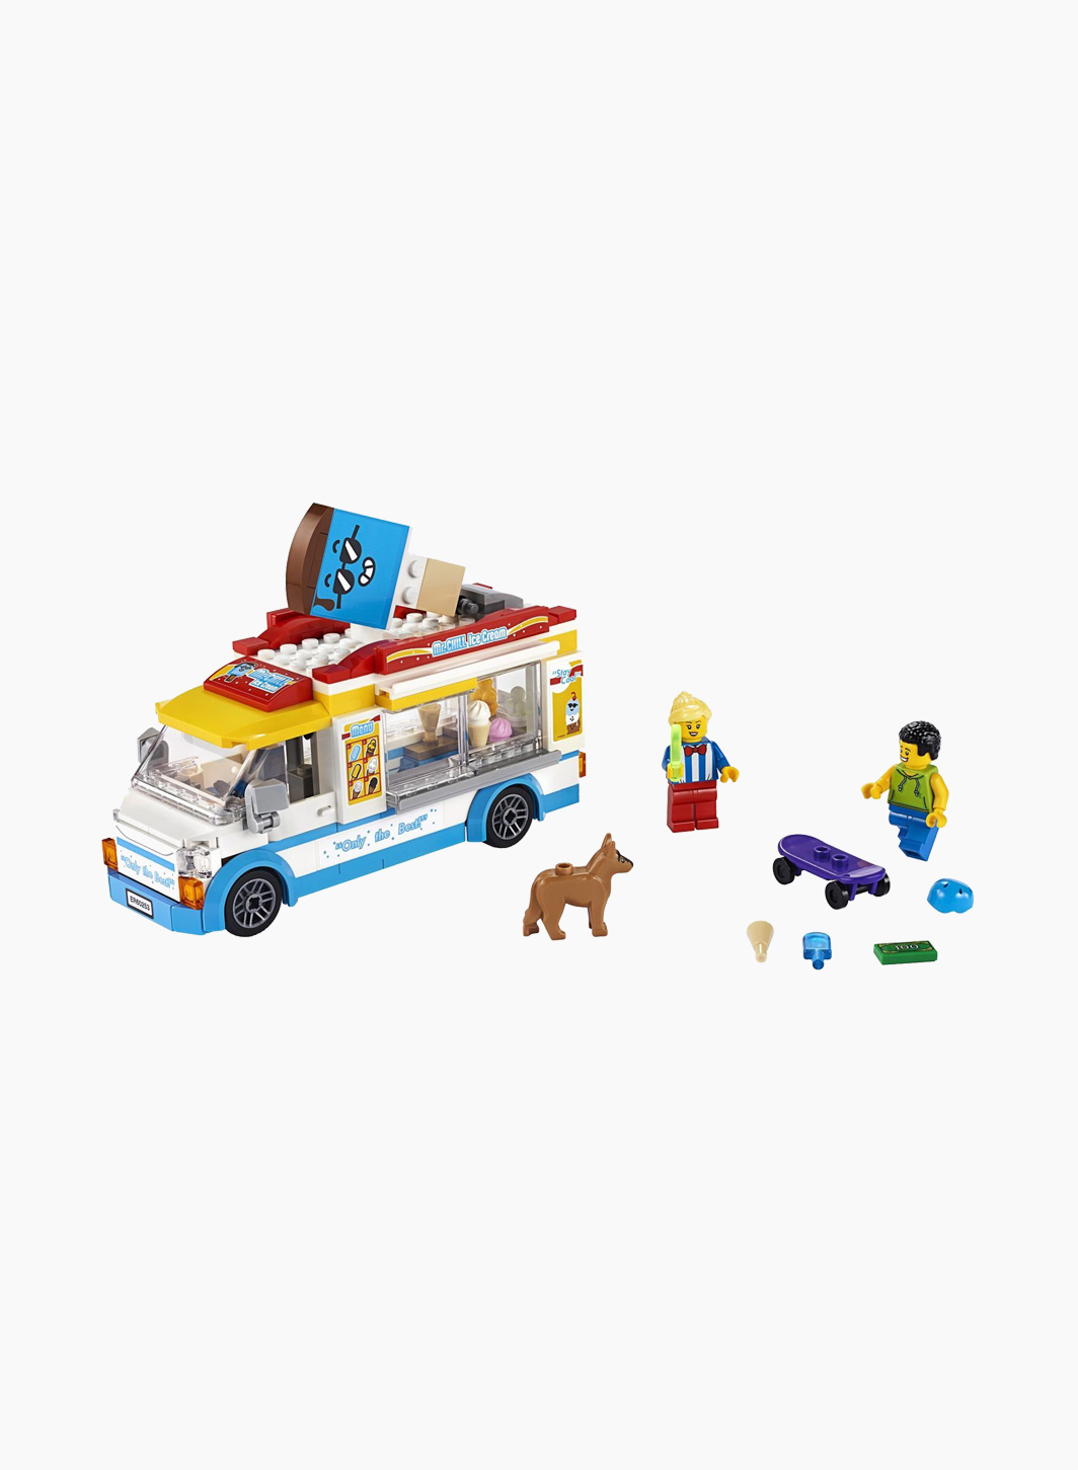 Lego City Конструктор Грузовик мороженщика